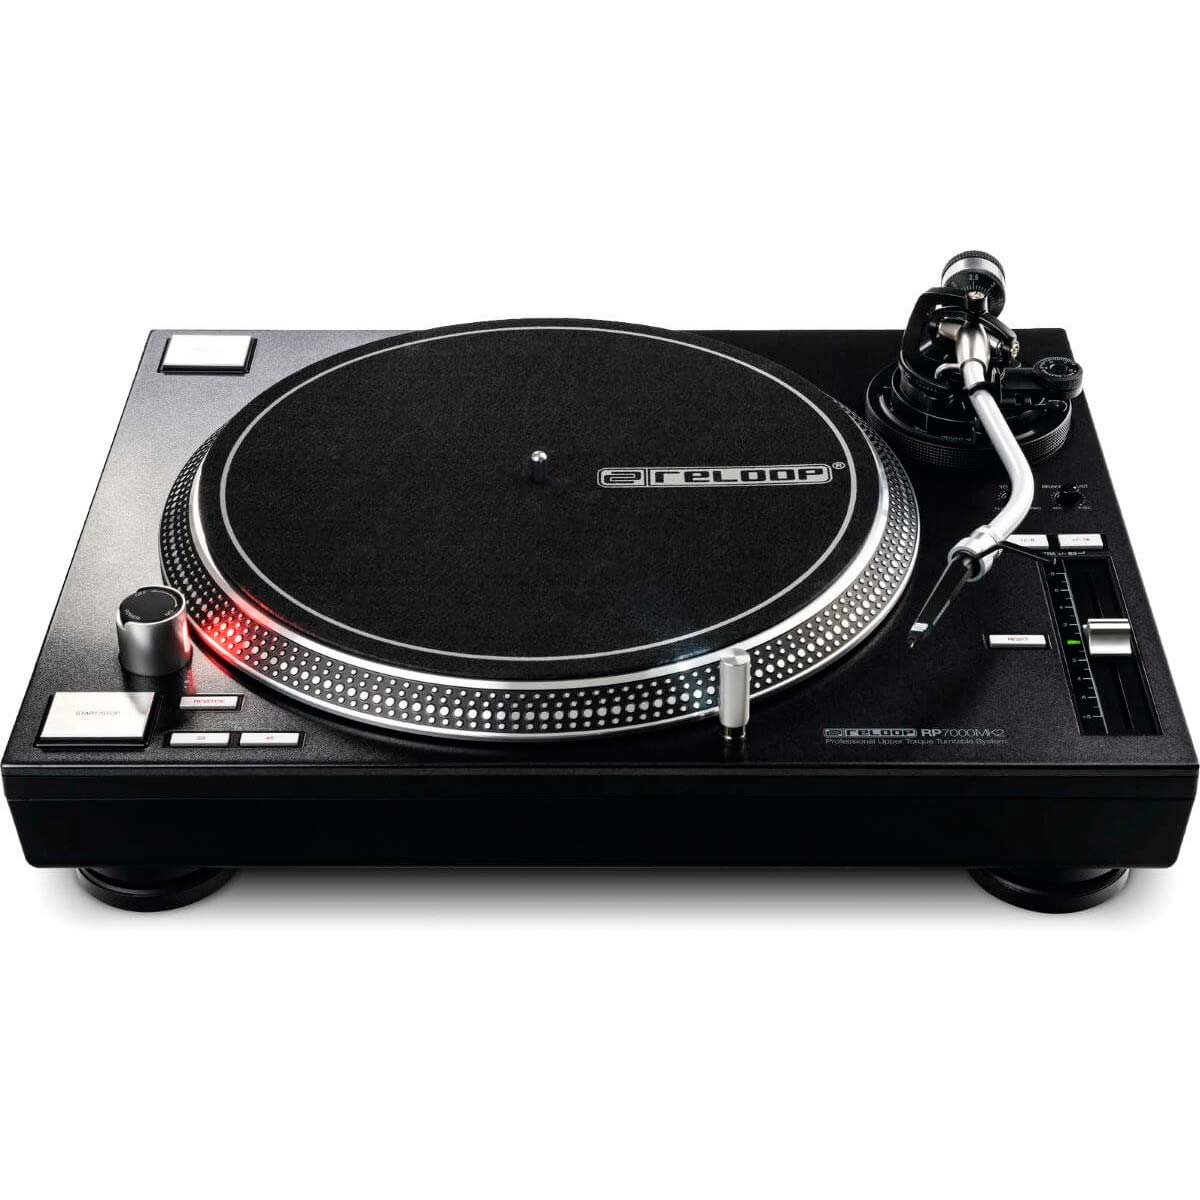 Giradiscos DJ Reloop RP-7000 MK2